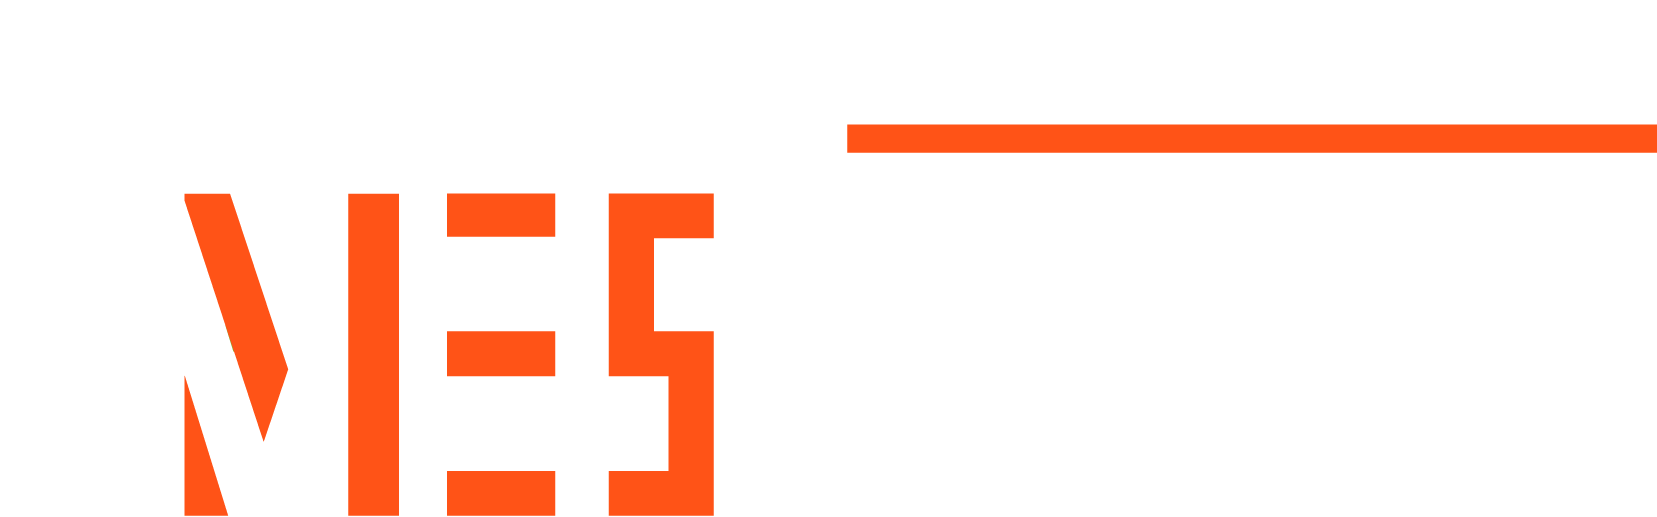 logo-mes-maintenance-etancheite-services